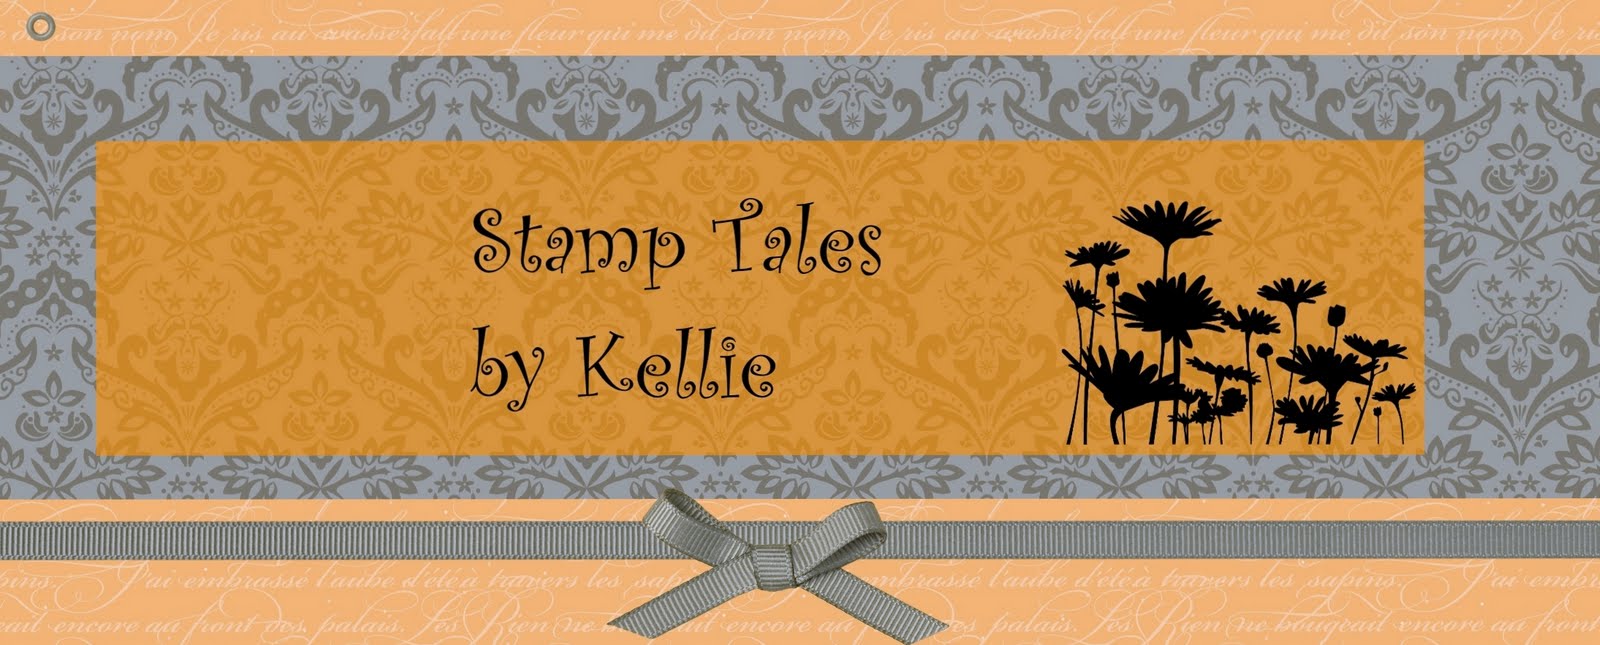 Stamp tales